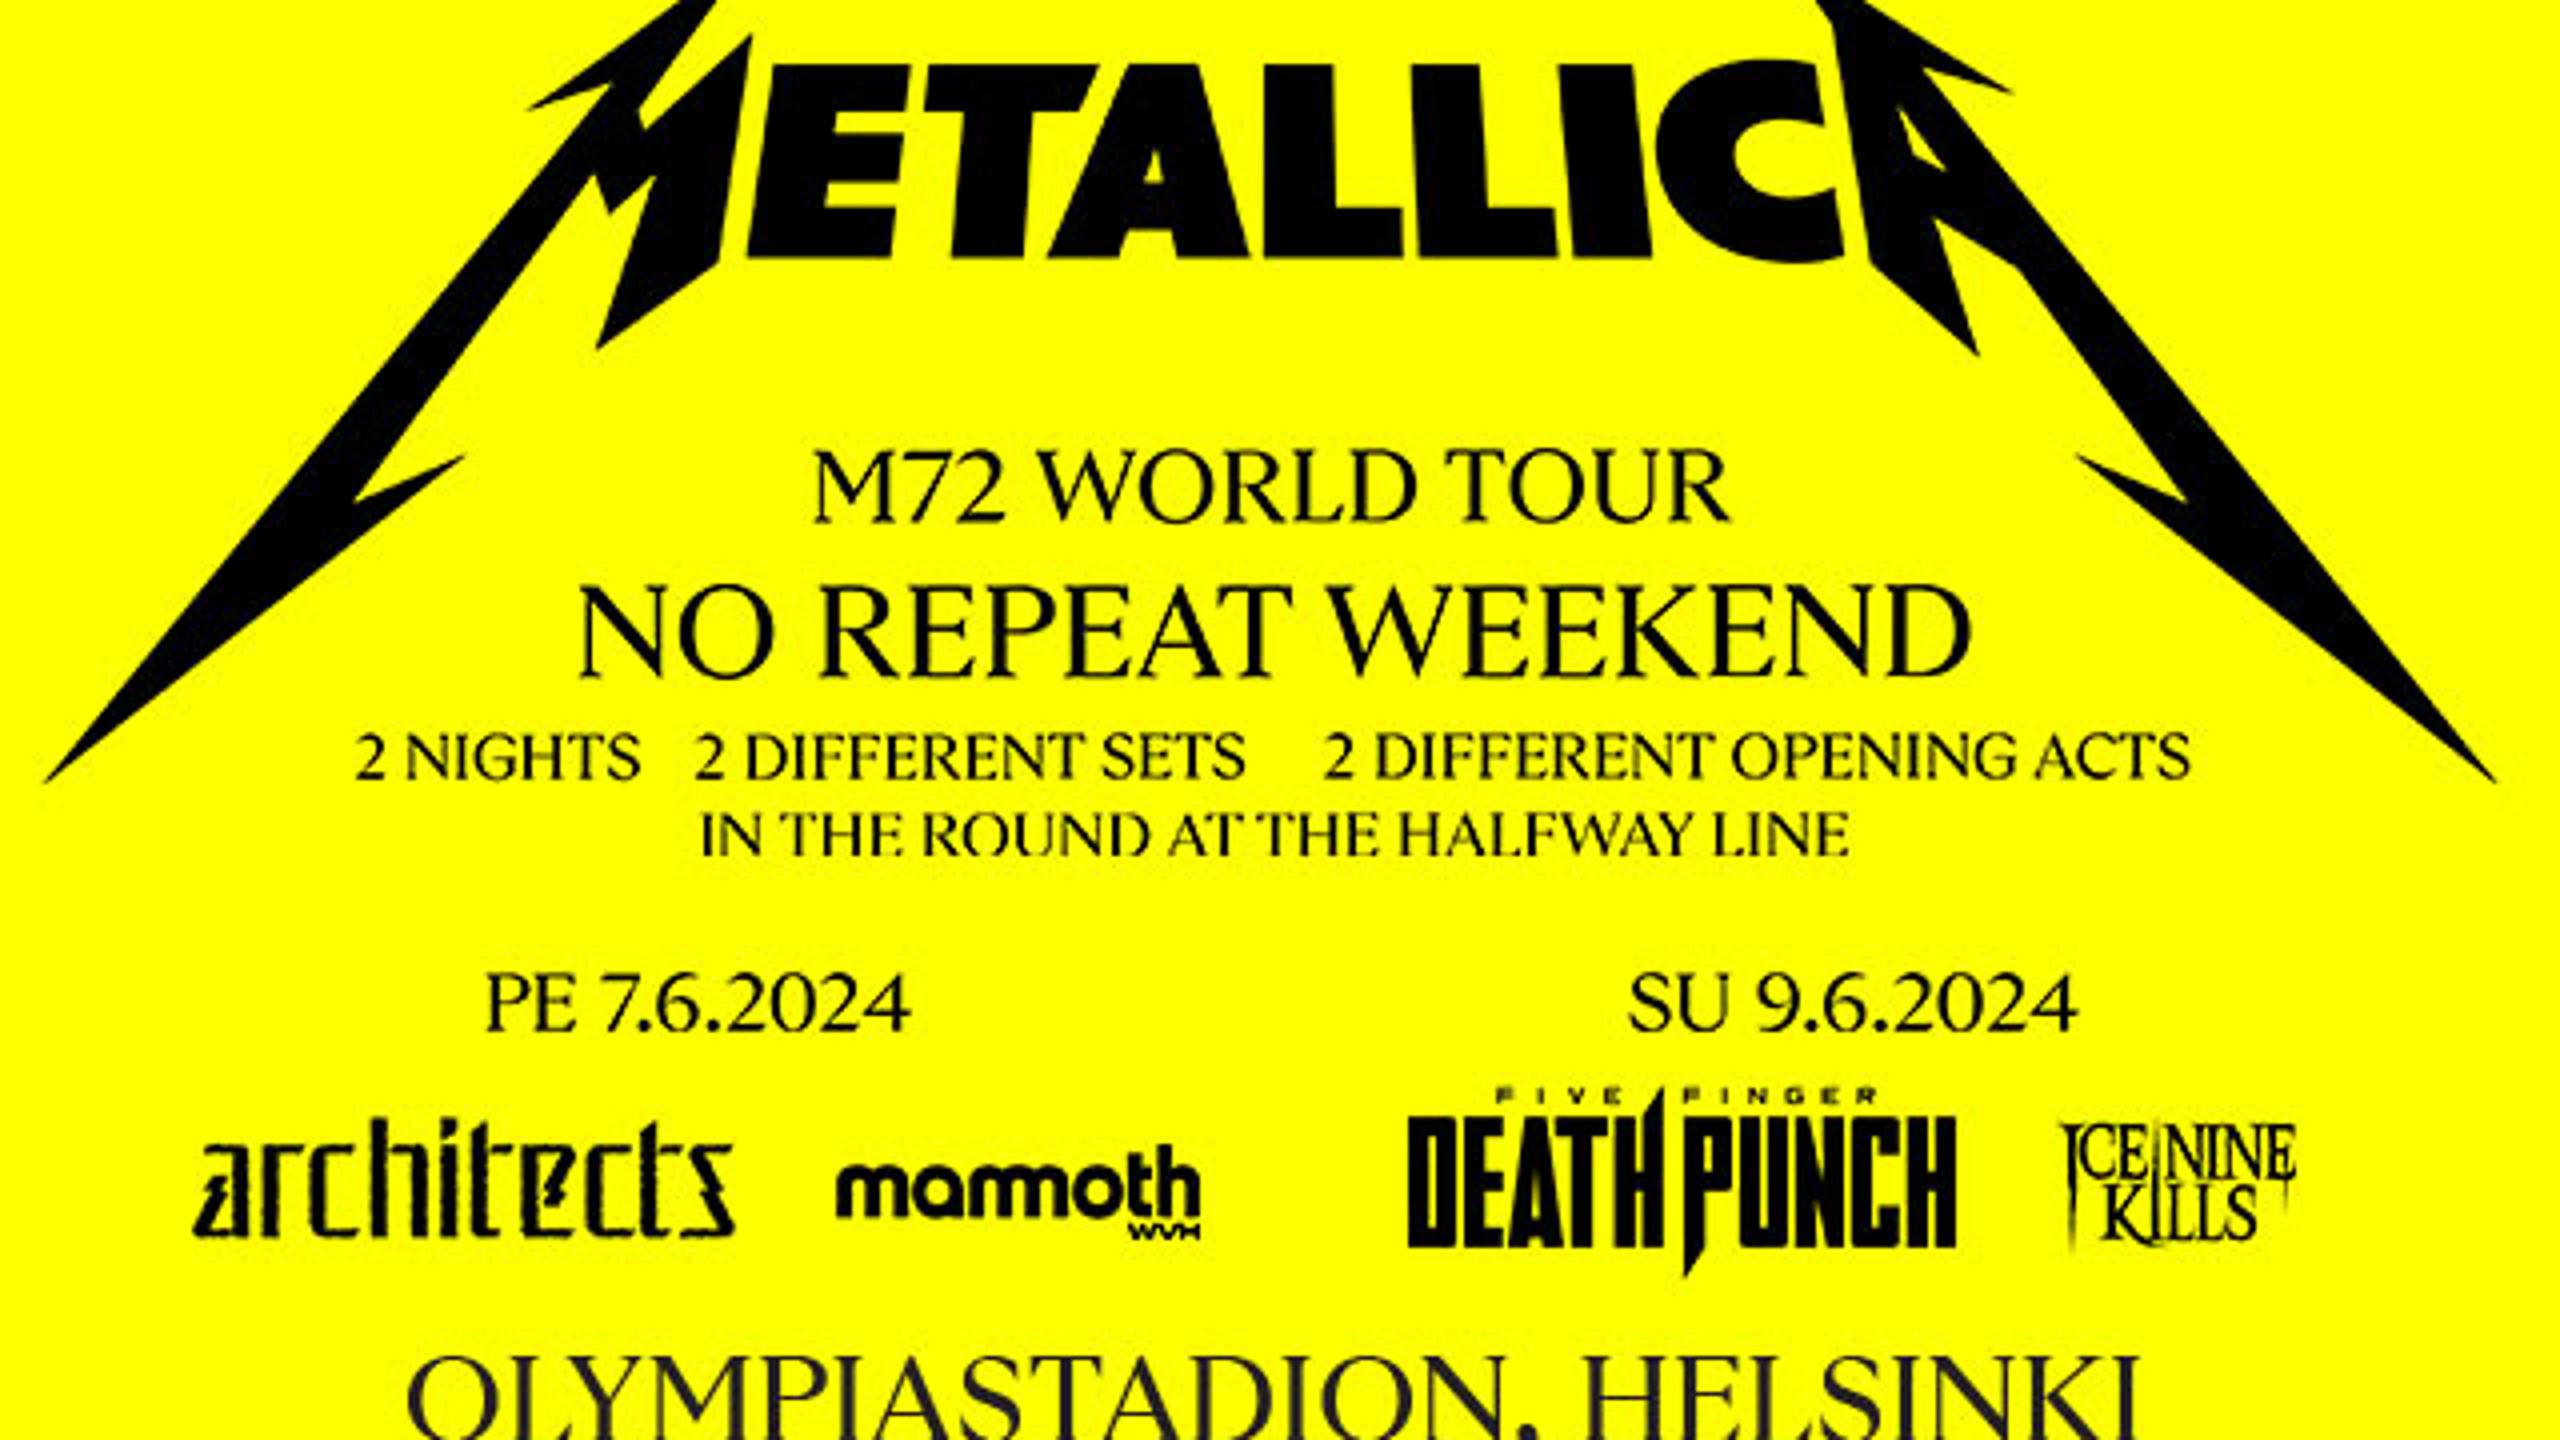 Metallica concert tickets for Olympic Stadium Helsinki, Helsinki Sunday, 9 June 2024 | Wegow